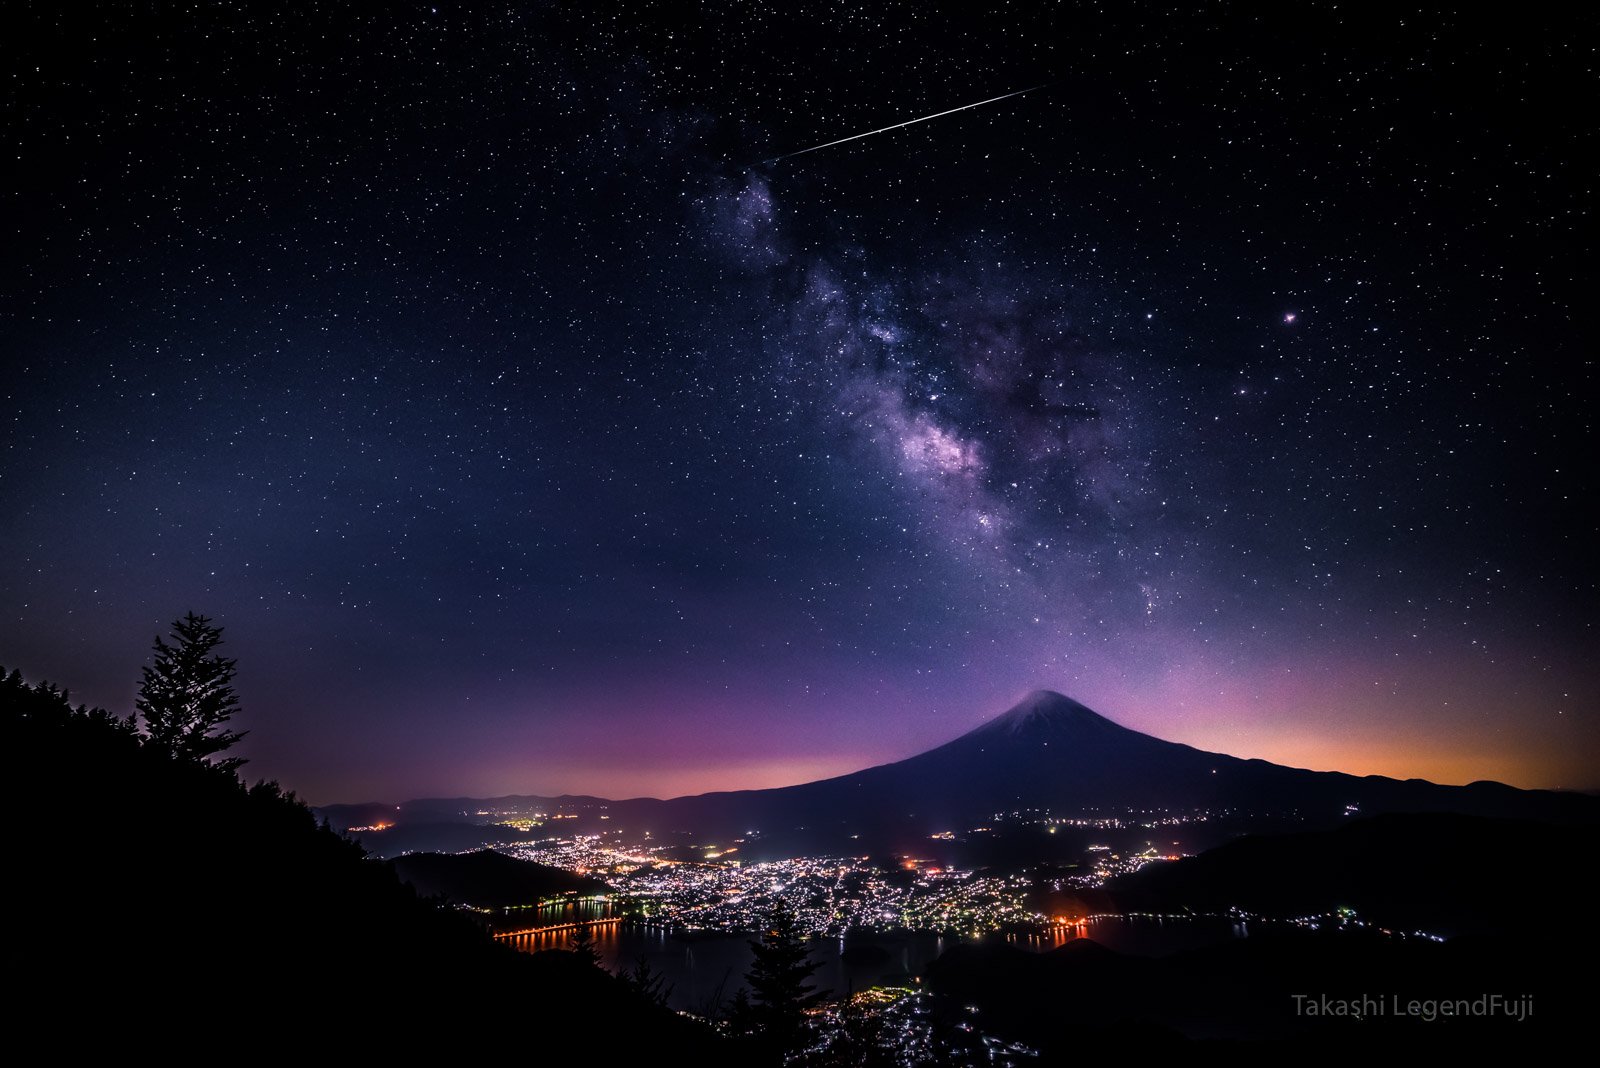 Fuji,mountain,Japan,Milky way,galaxy,star,ray,beam,sky,blue,purple,night, Takashi